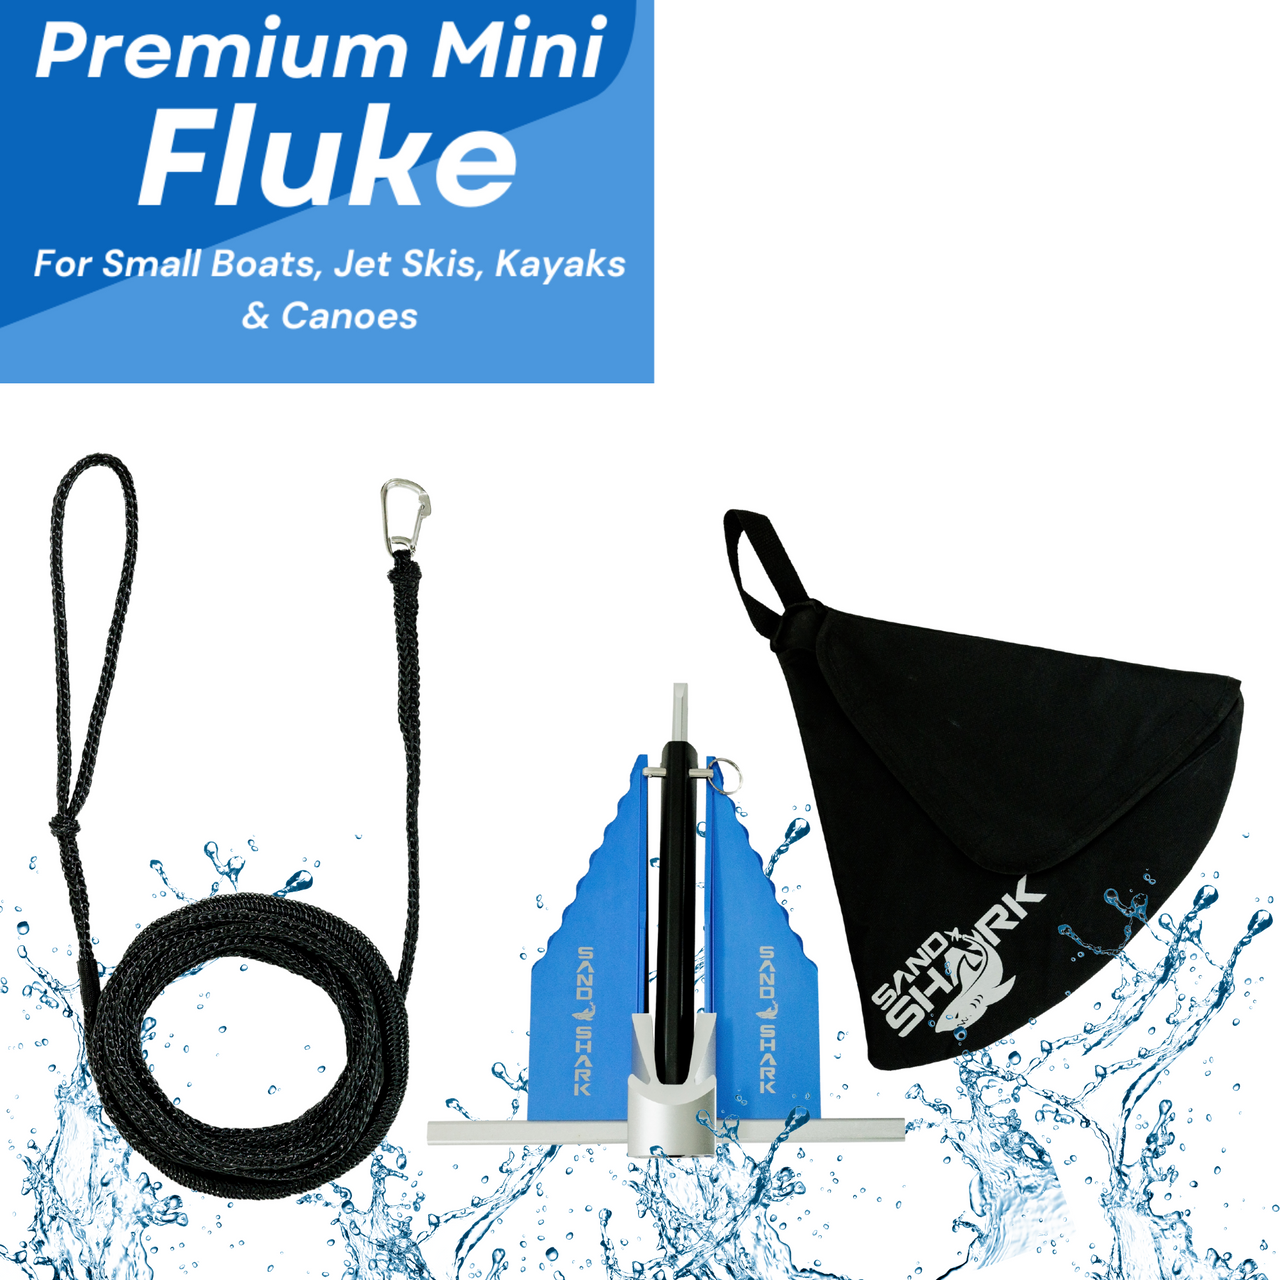 SandShark Mini Fluke Aluminum Jet Ski Anchor Kit - Versatile PWC